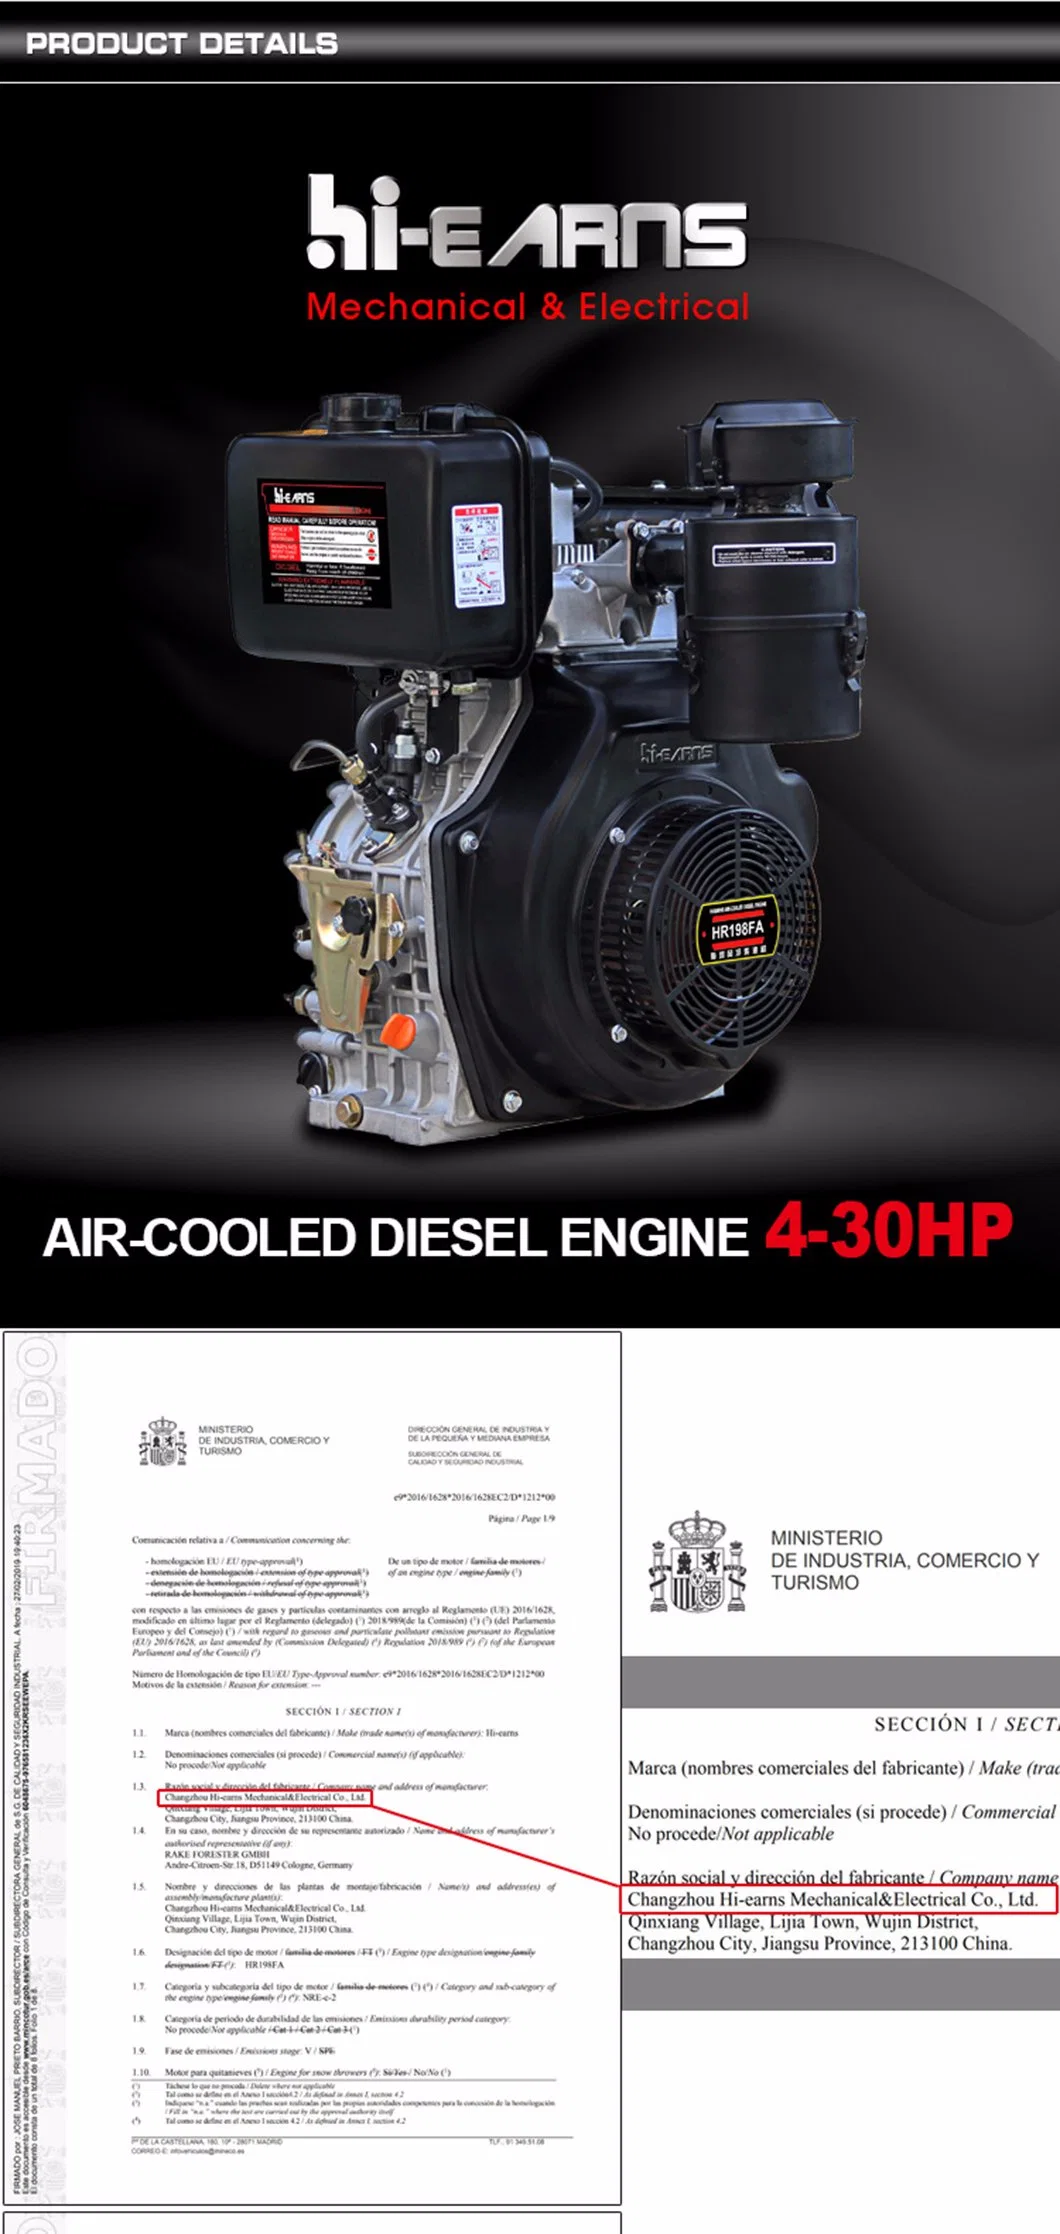 Speed Naturally Aspirated Hi-Earns / OEM 18kw Generator Aircooled Diesel Engine